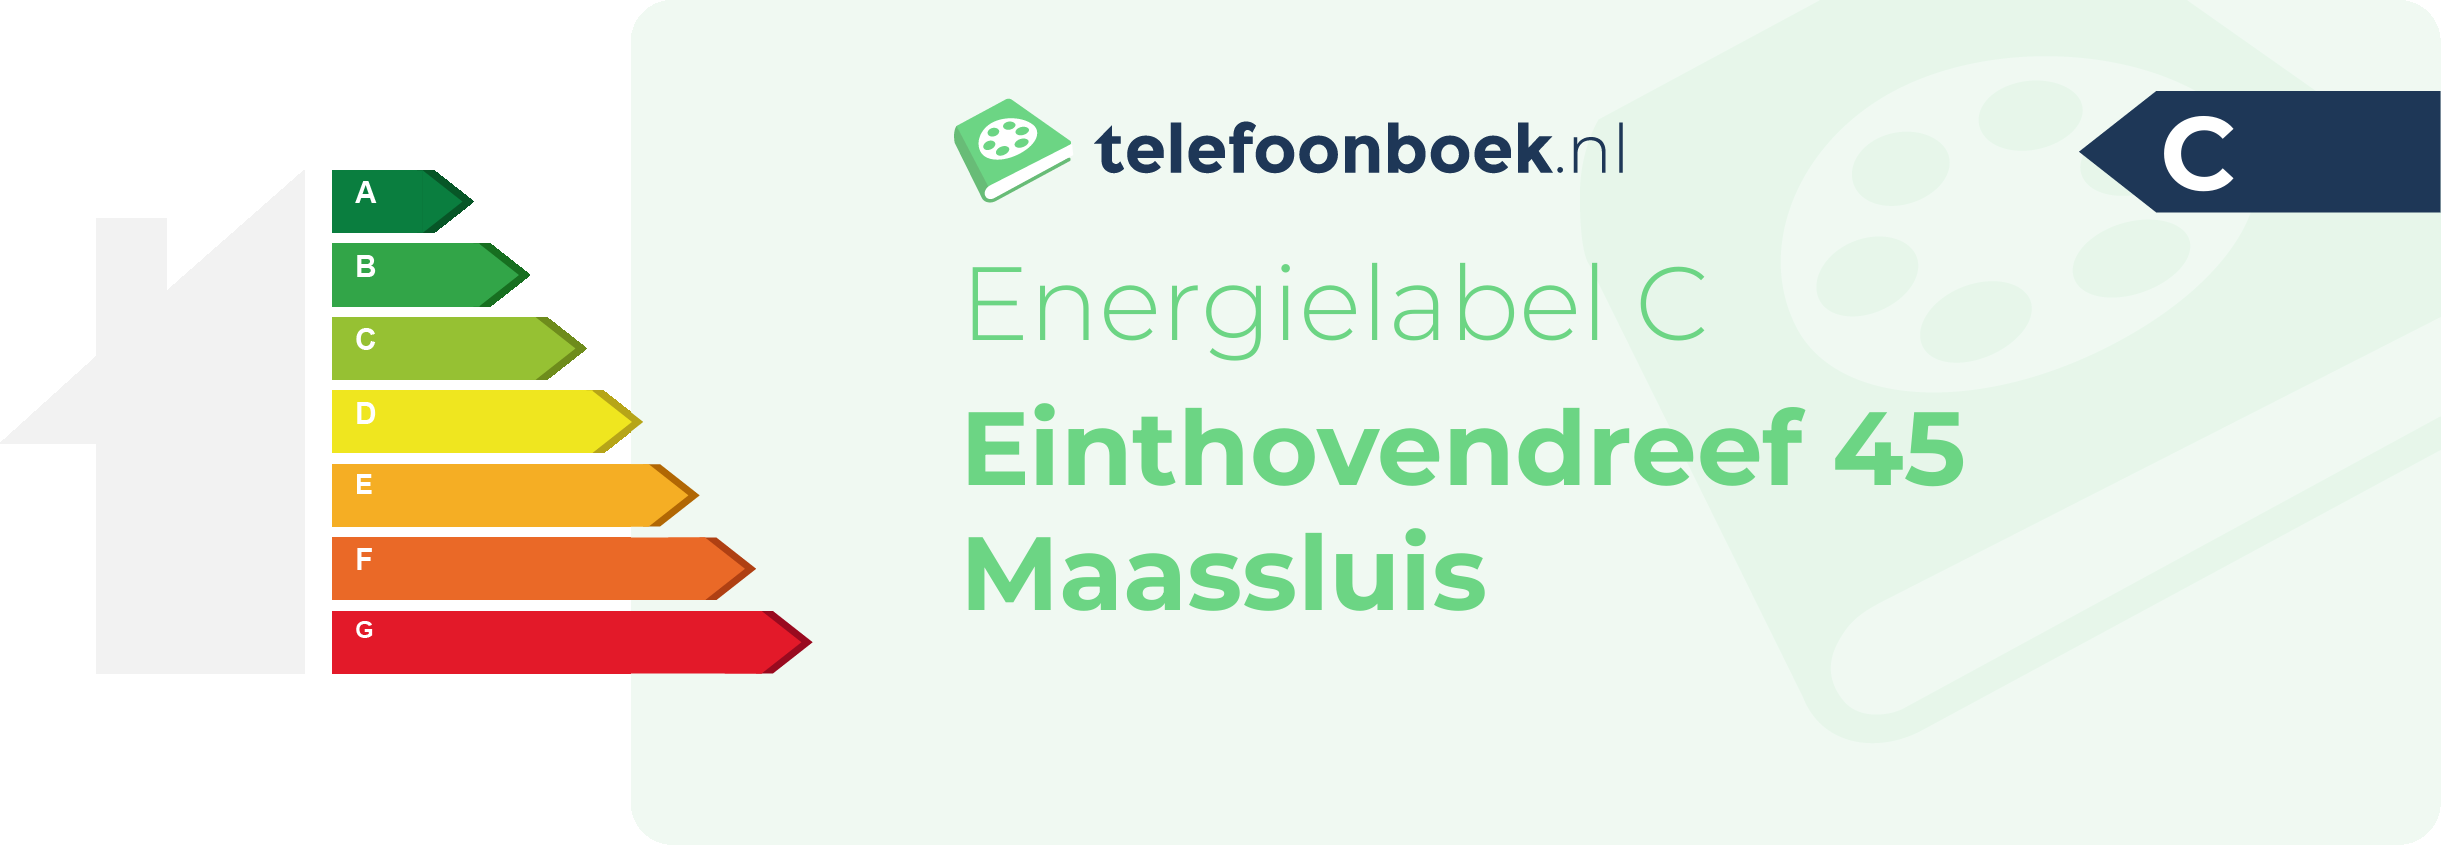 Energielabel Einthovendreef 45 Maassluis